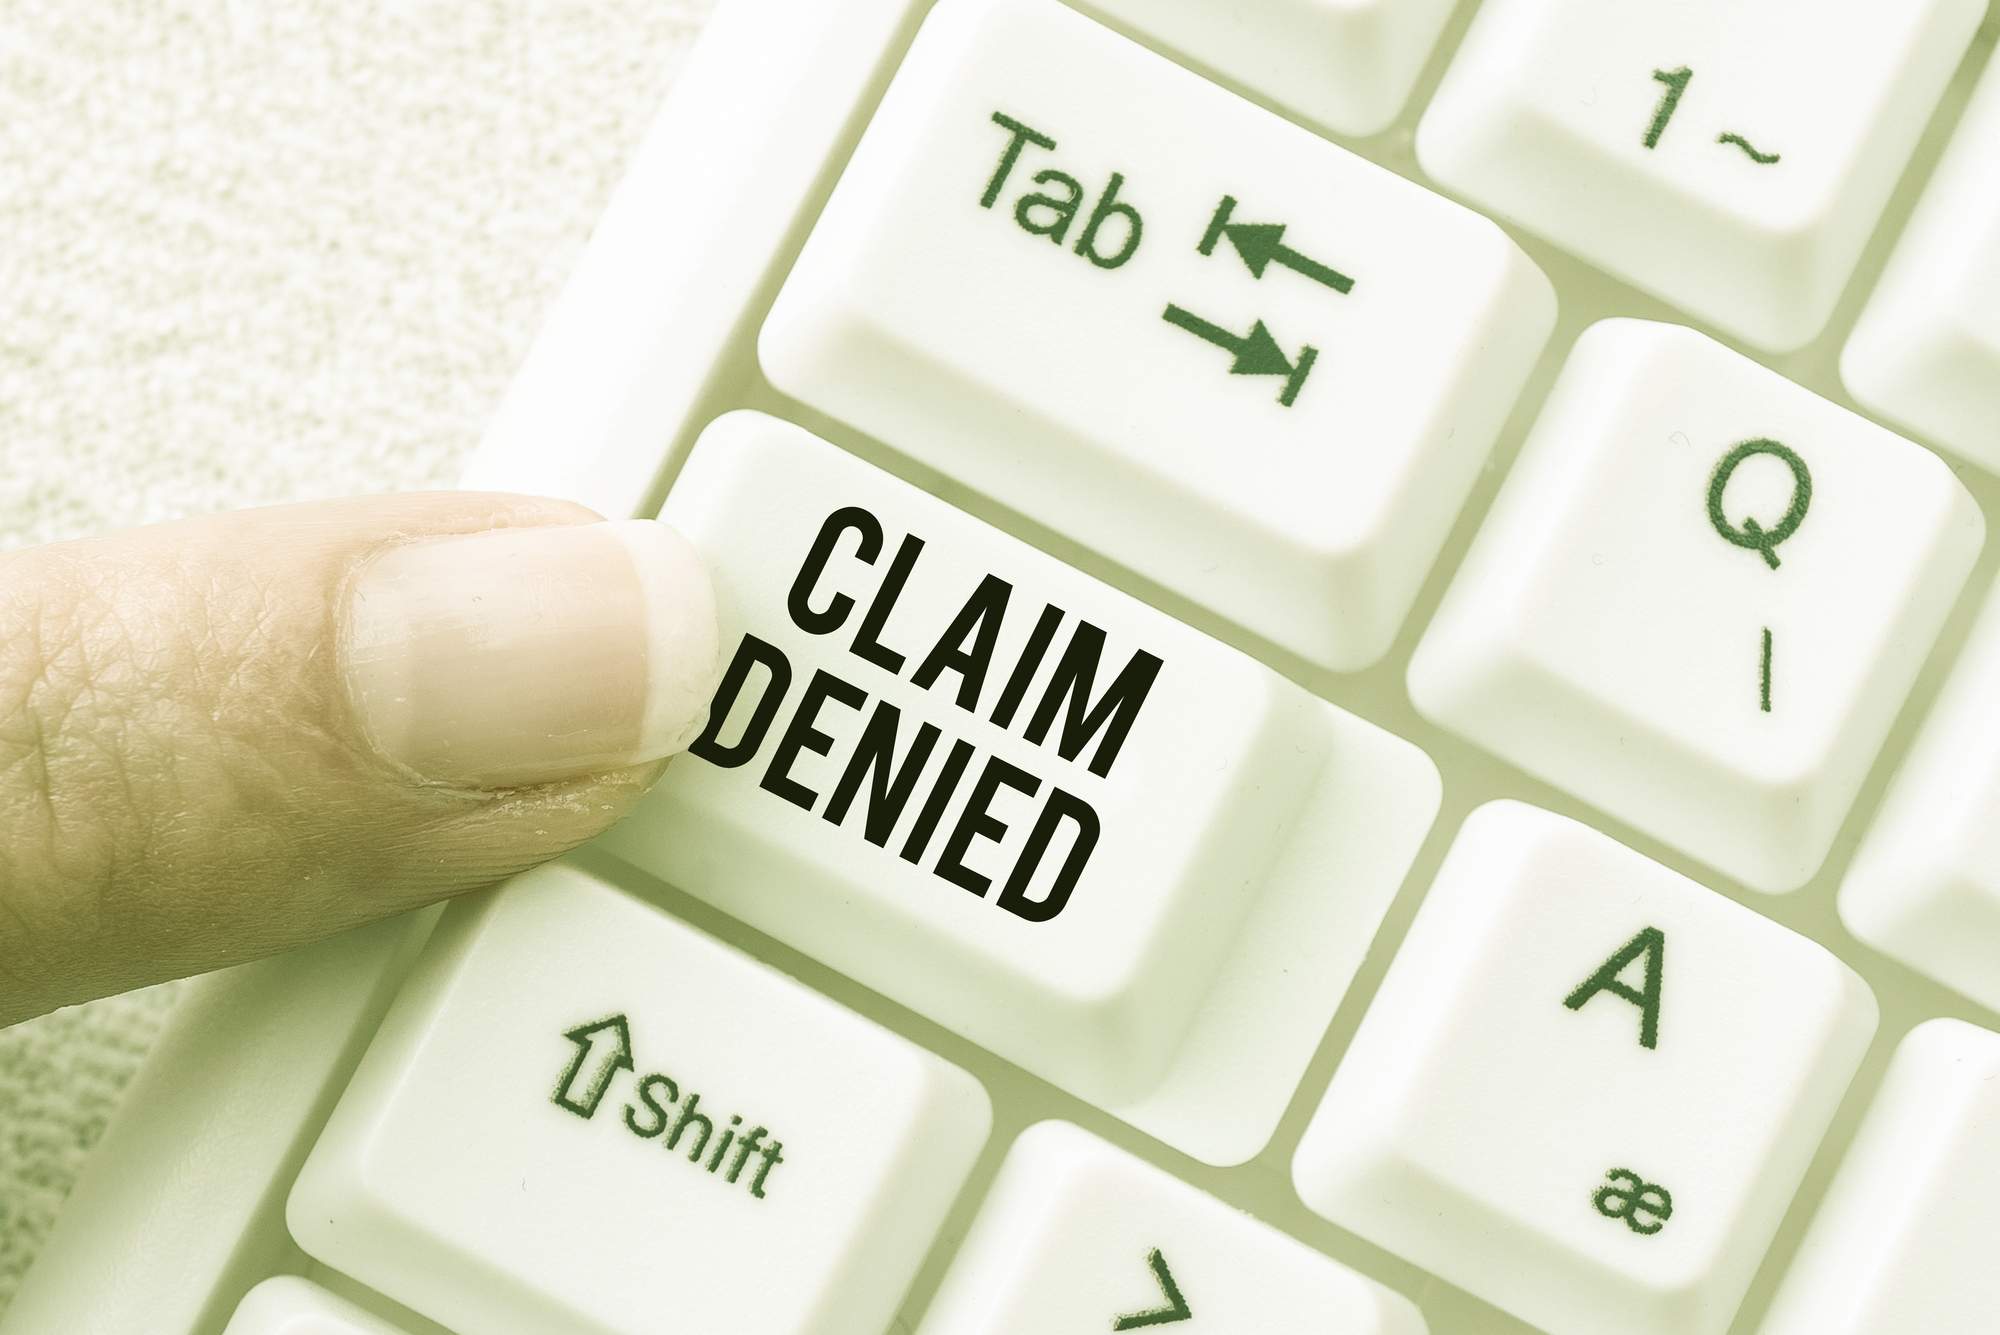 Cyberinsurance claim denied due to cybercrime